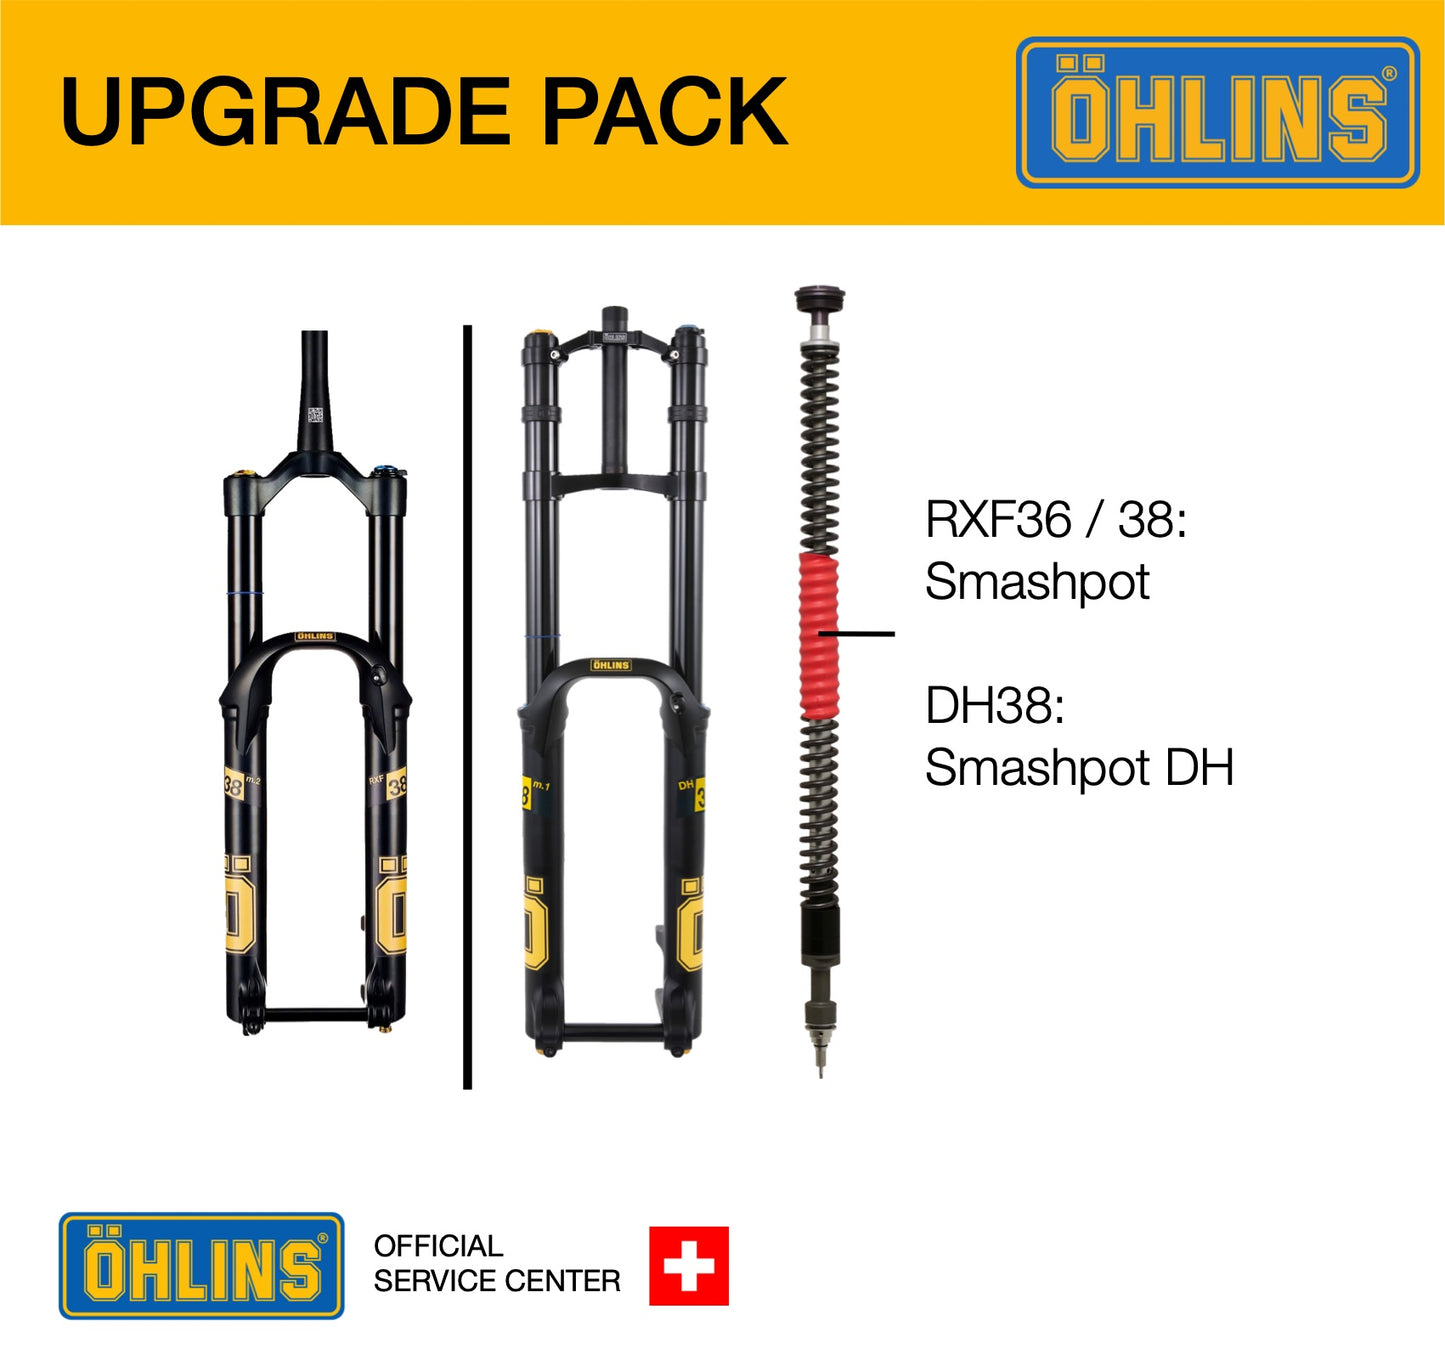 Service+Upgrade Öhlins RXF38 / RXF36 / DH38